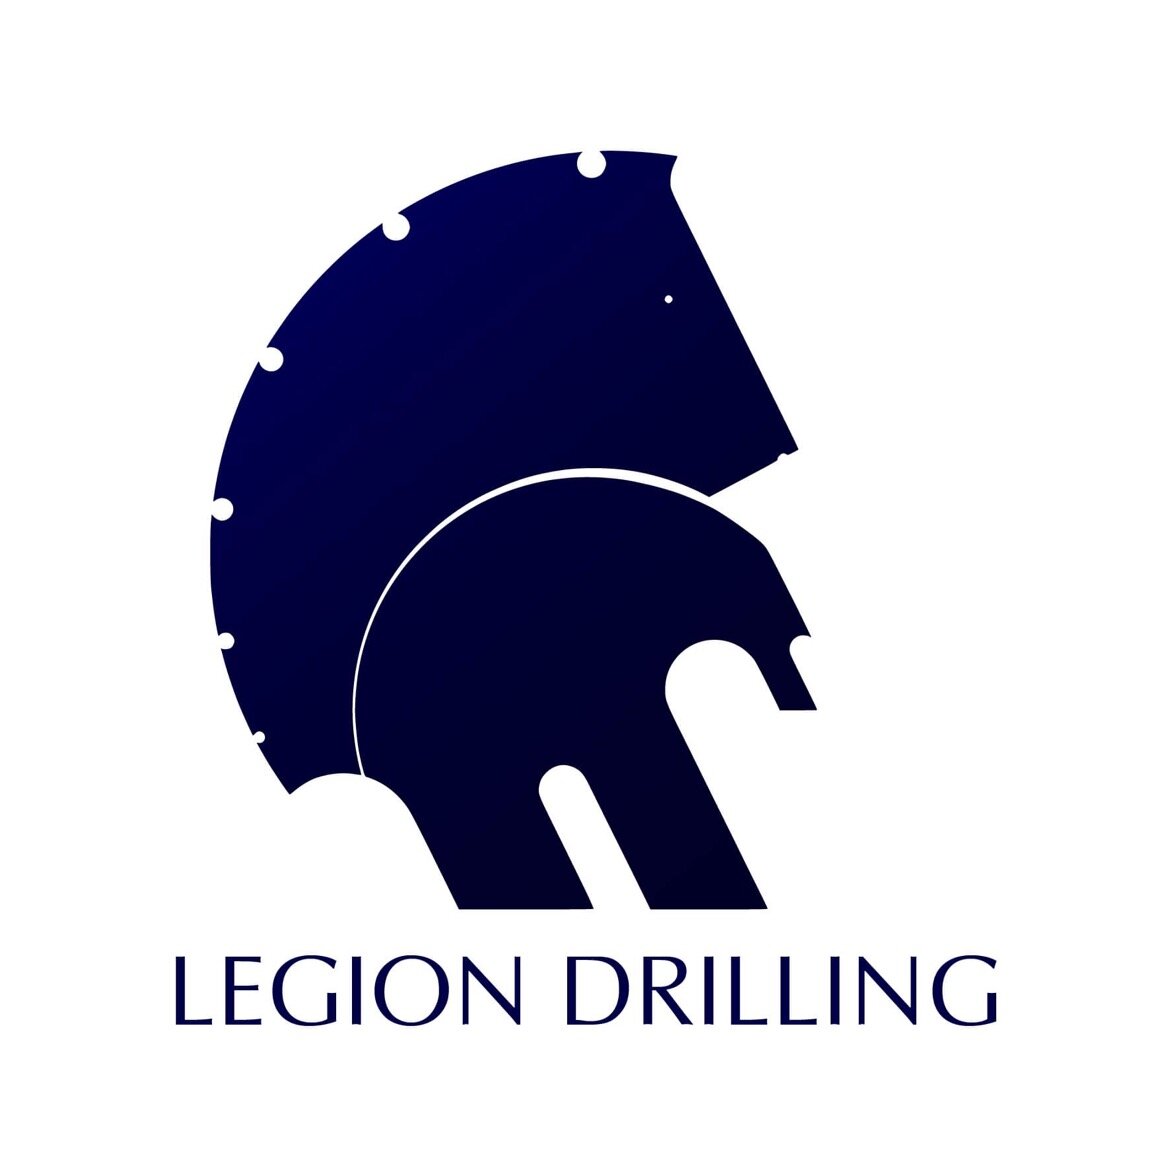 Drilling Companies Brisbane